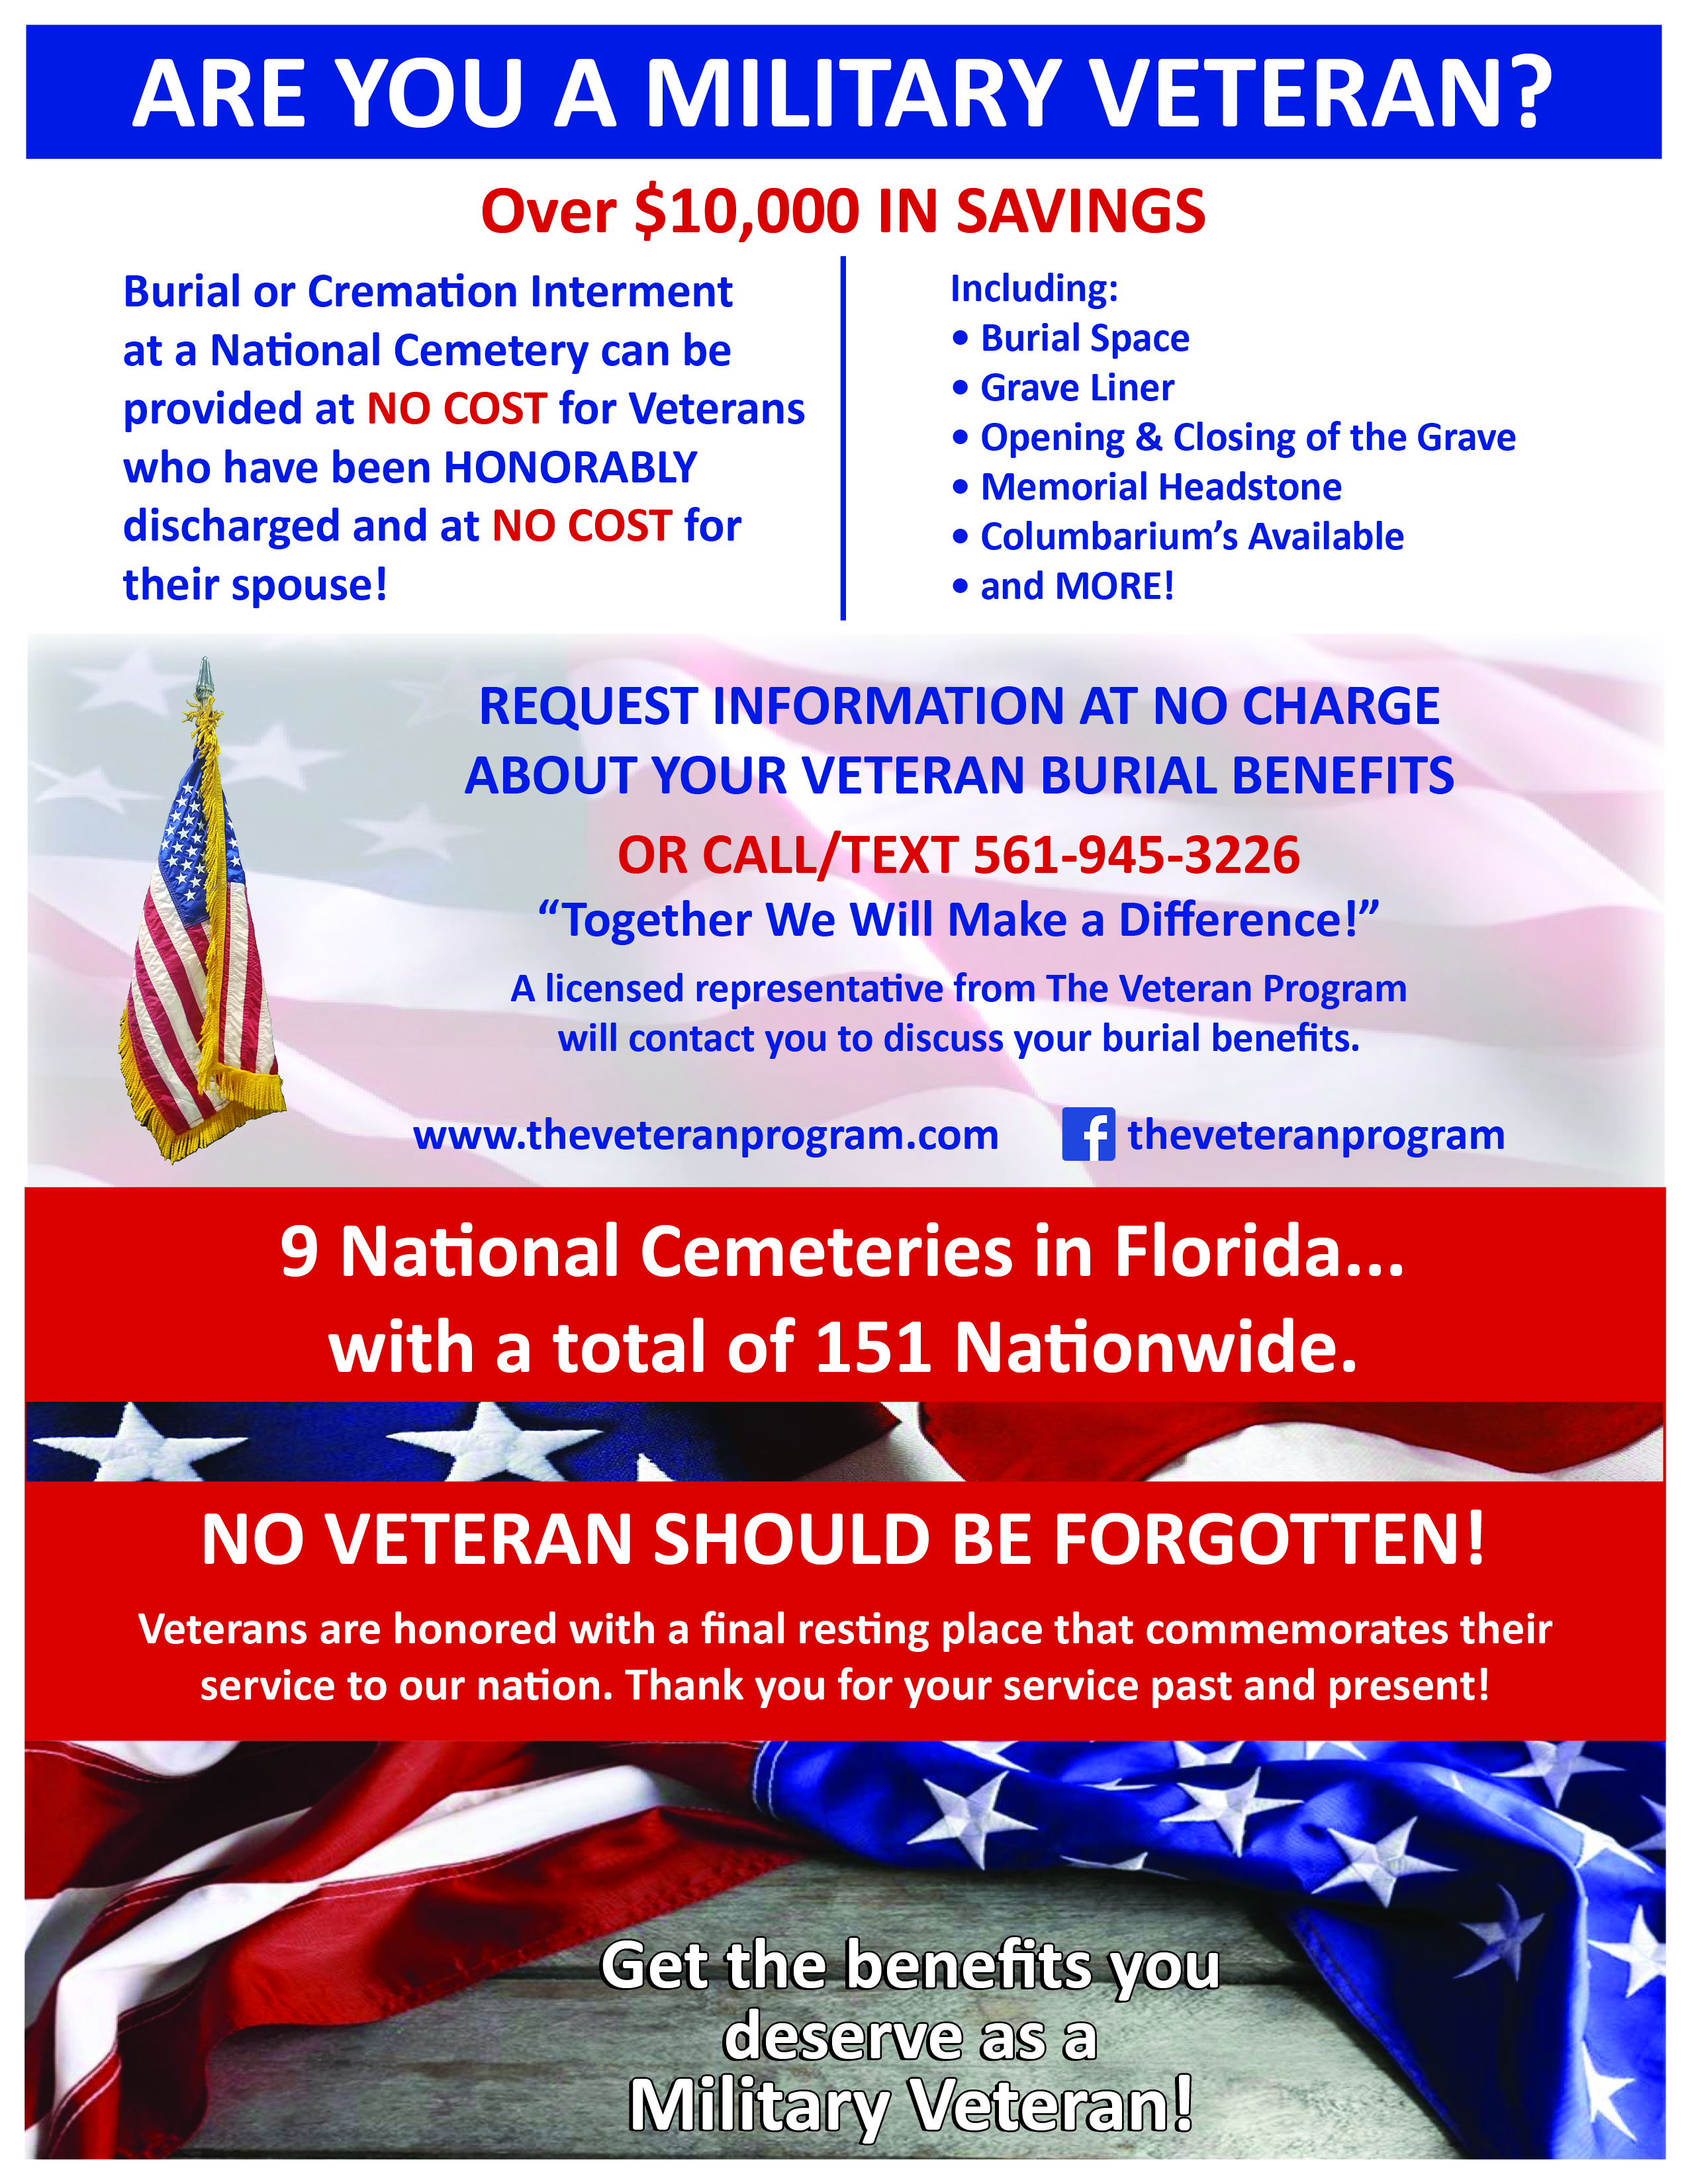 Veteran Benefits Ad